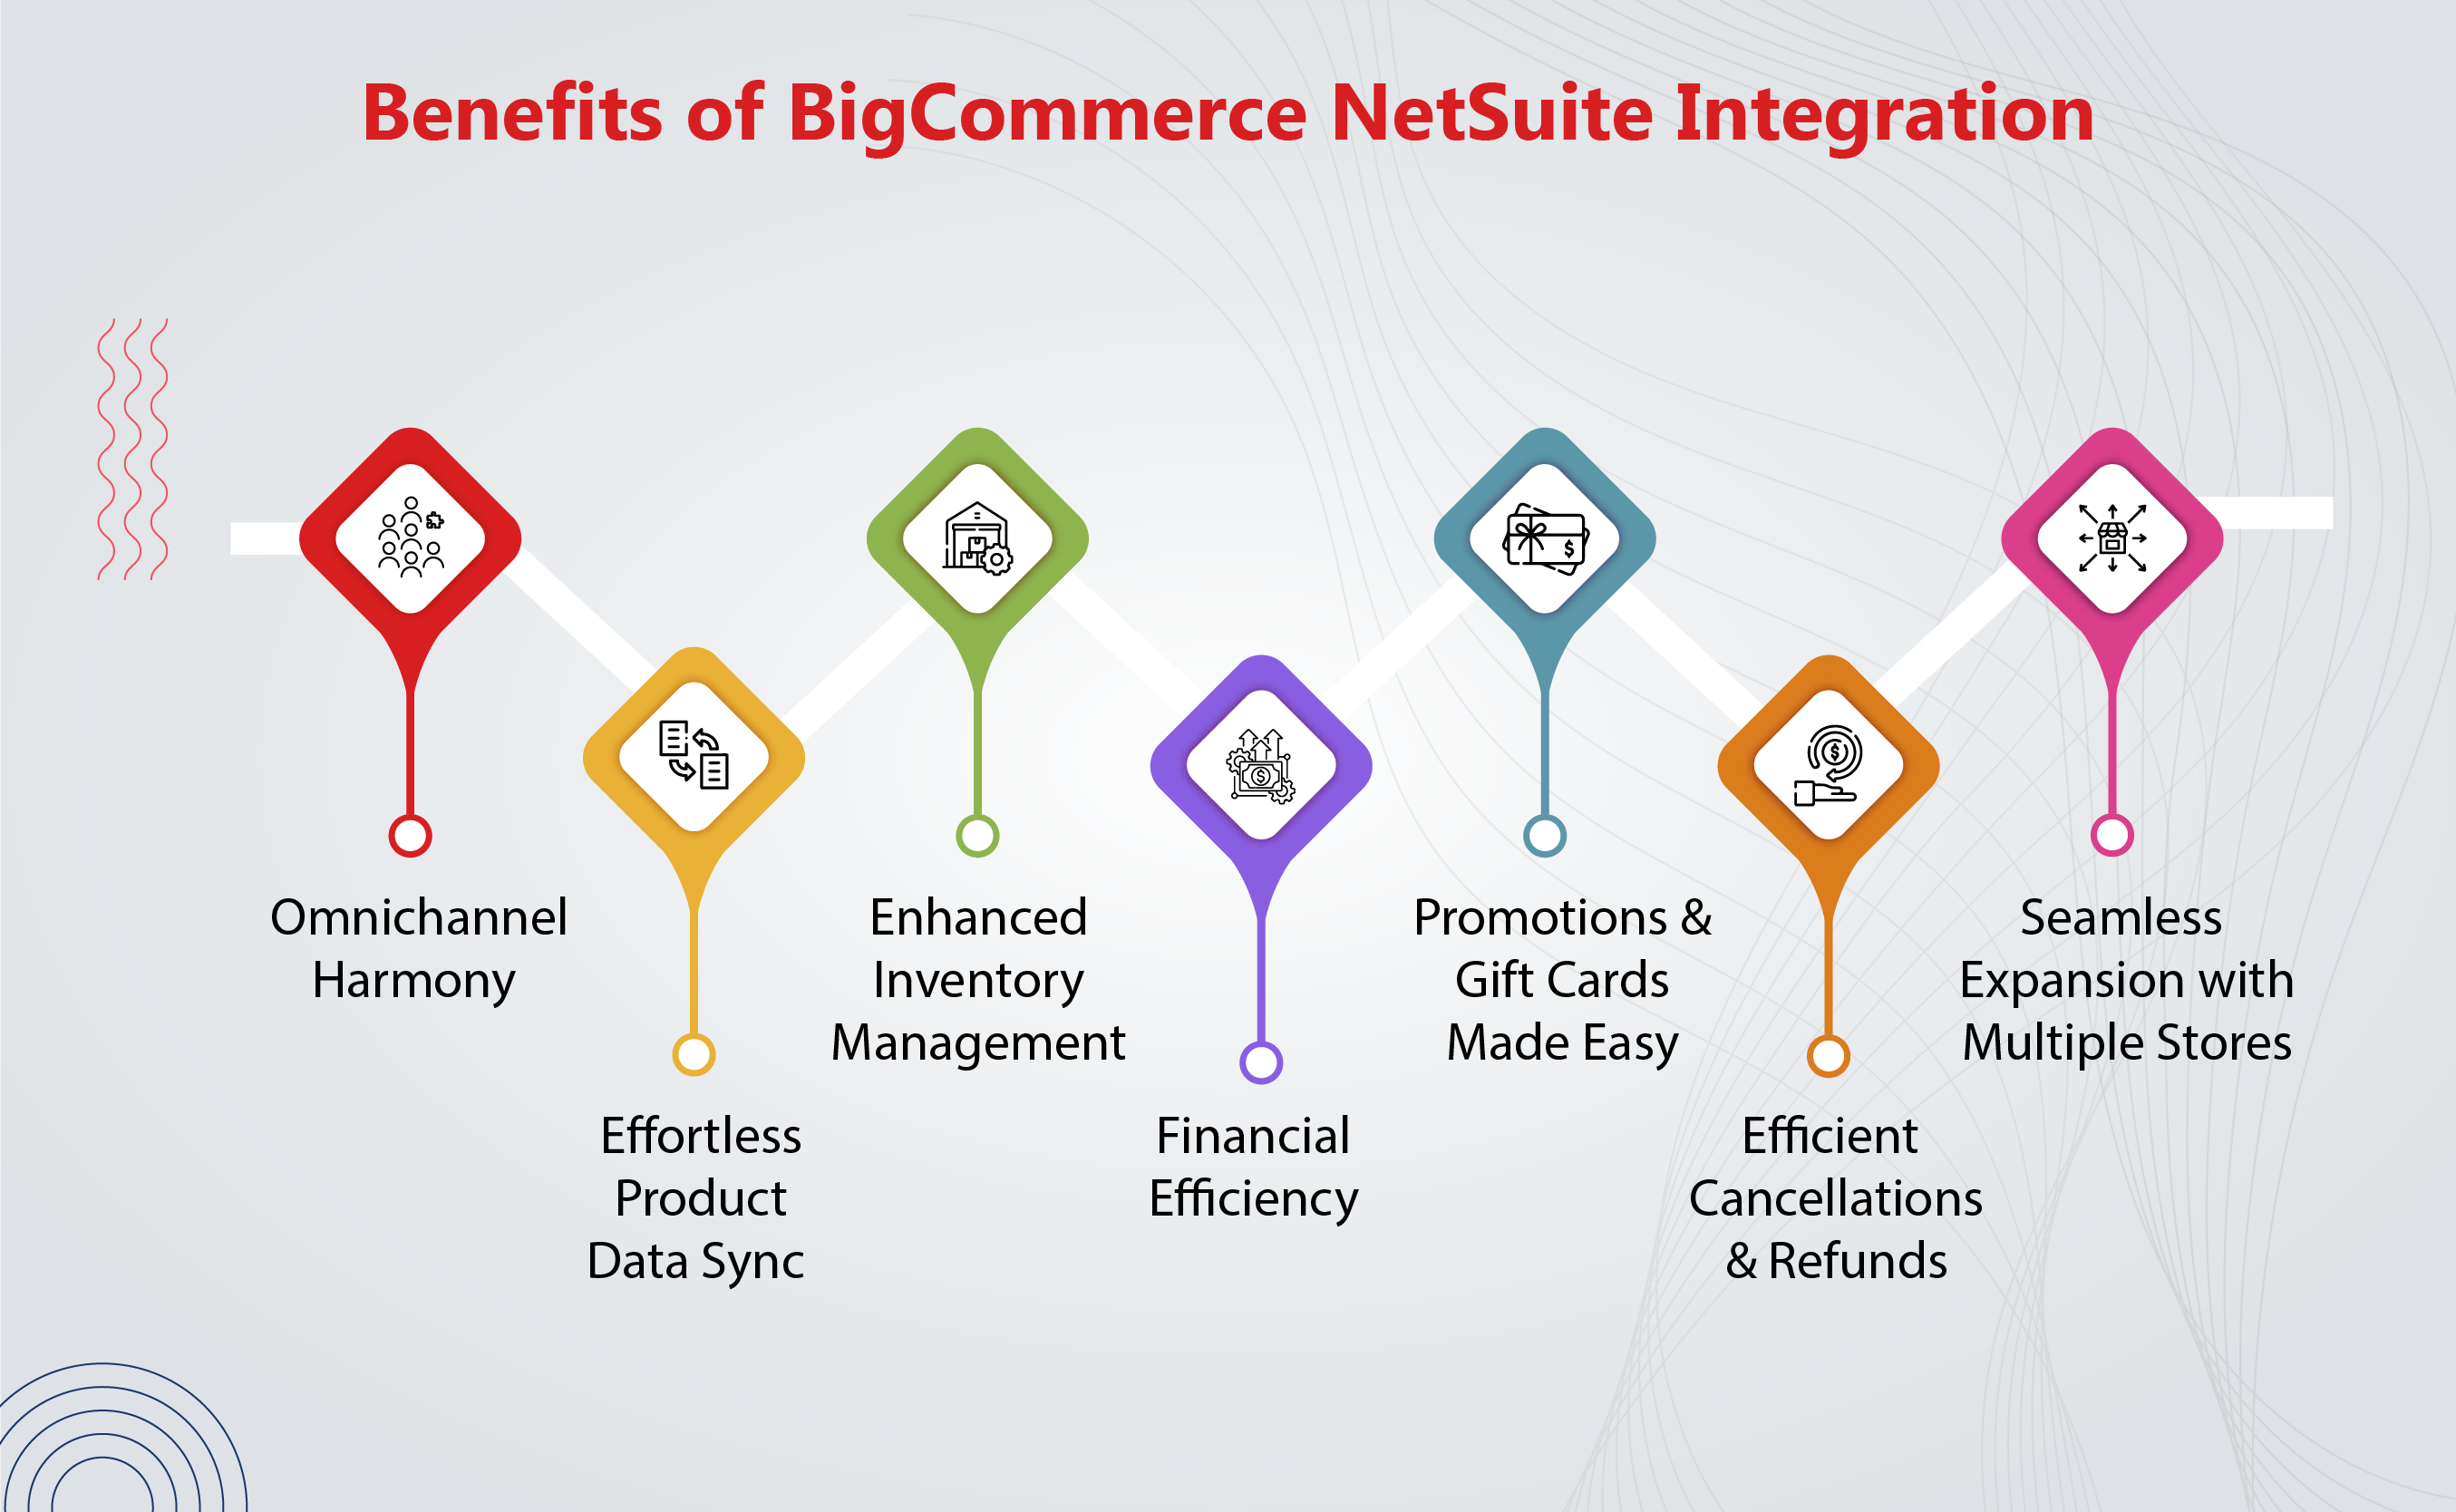 Benefits of NetSuite BigCommerce Integration